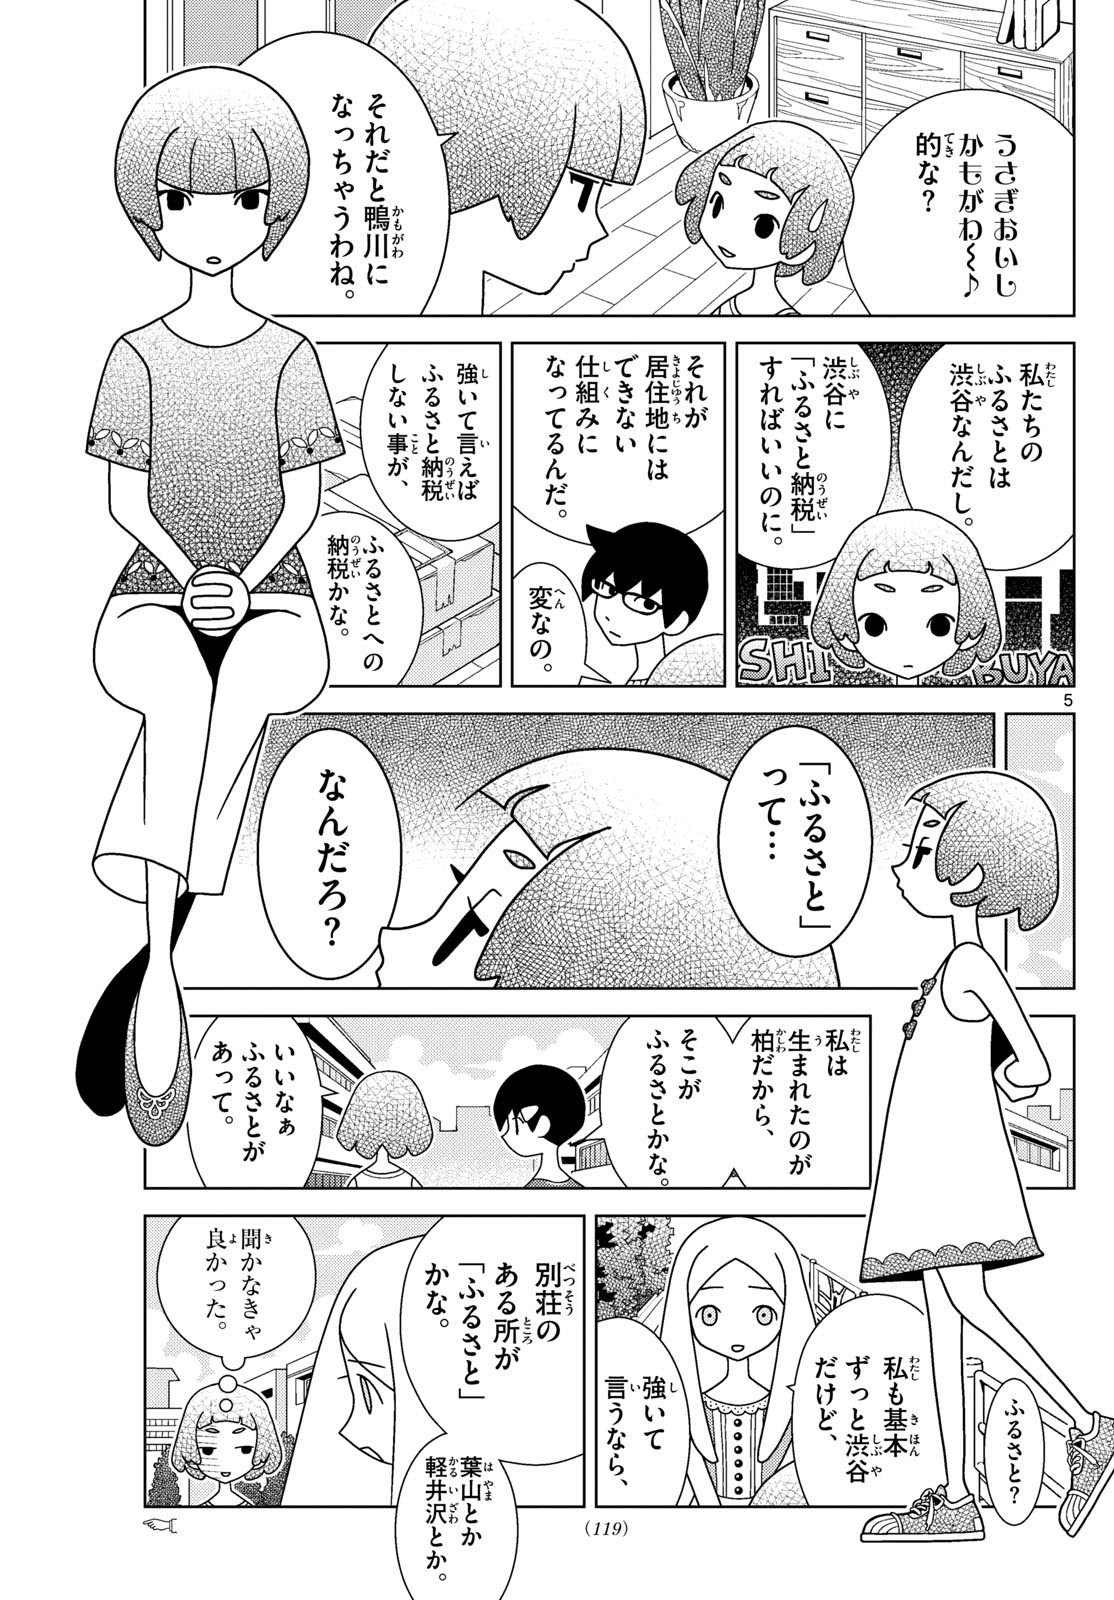 Shibuya Near Family - Chapter 102 - Page 5